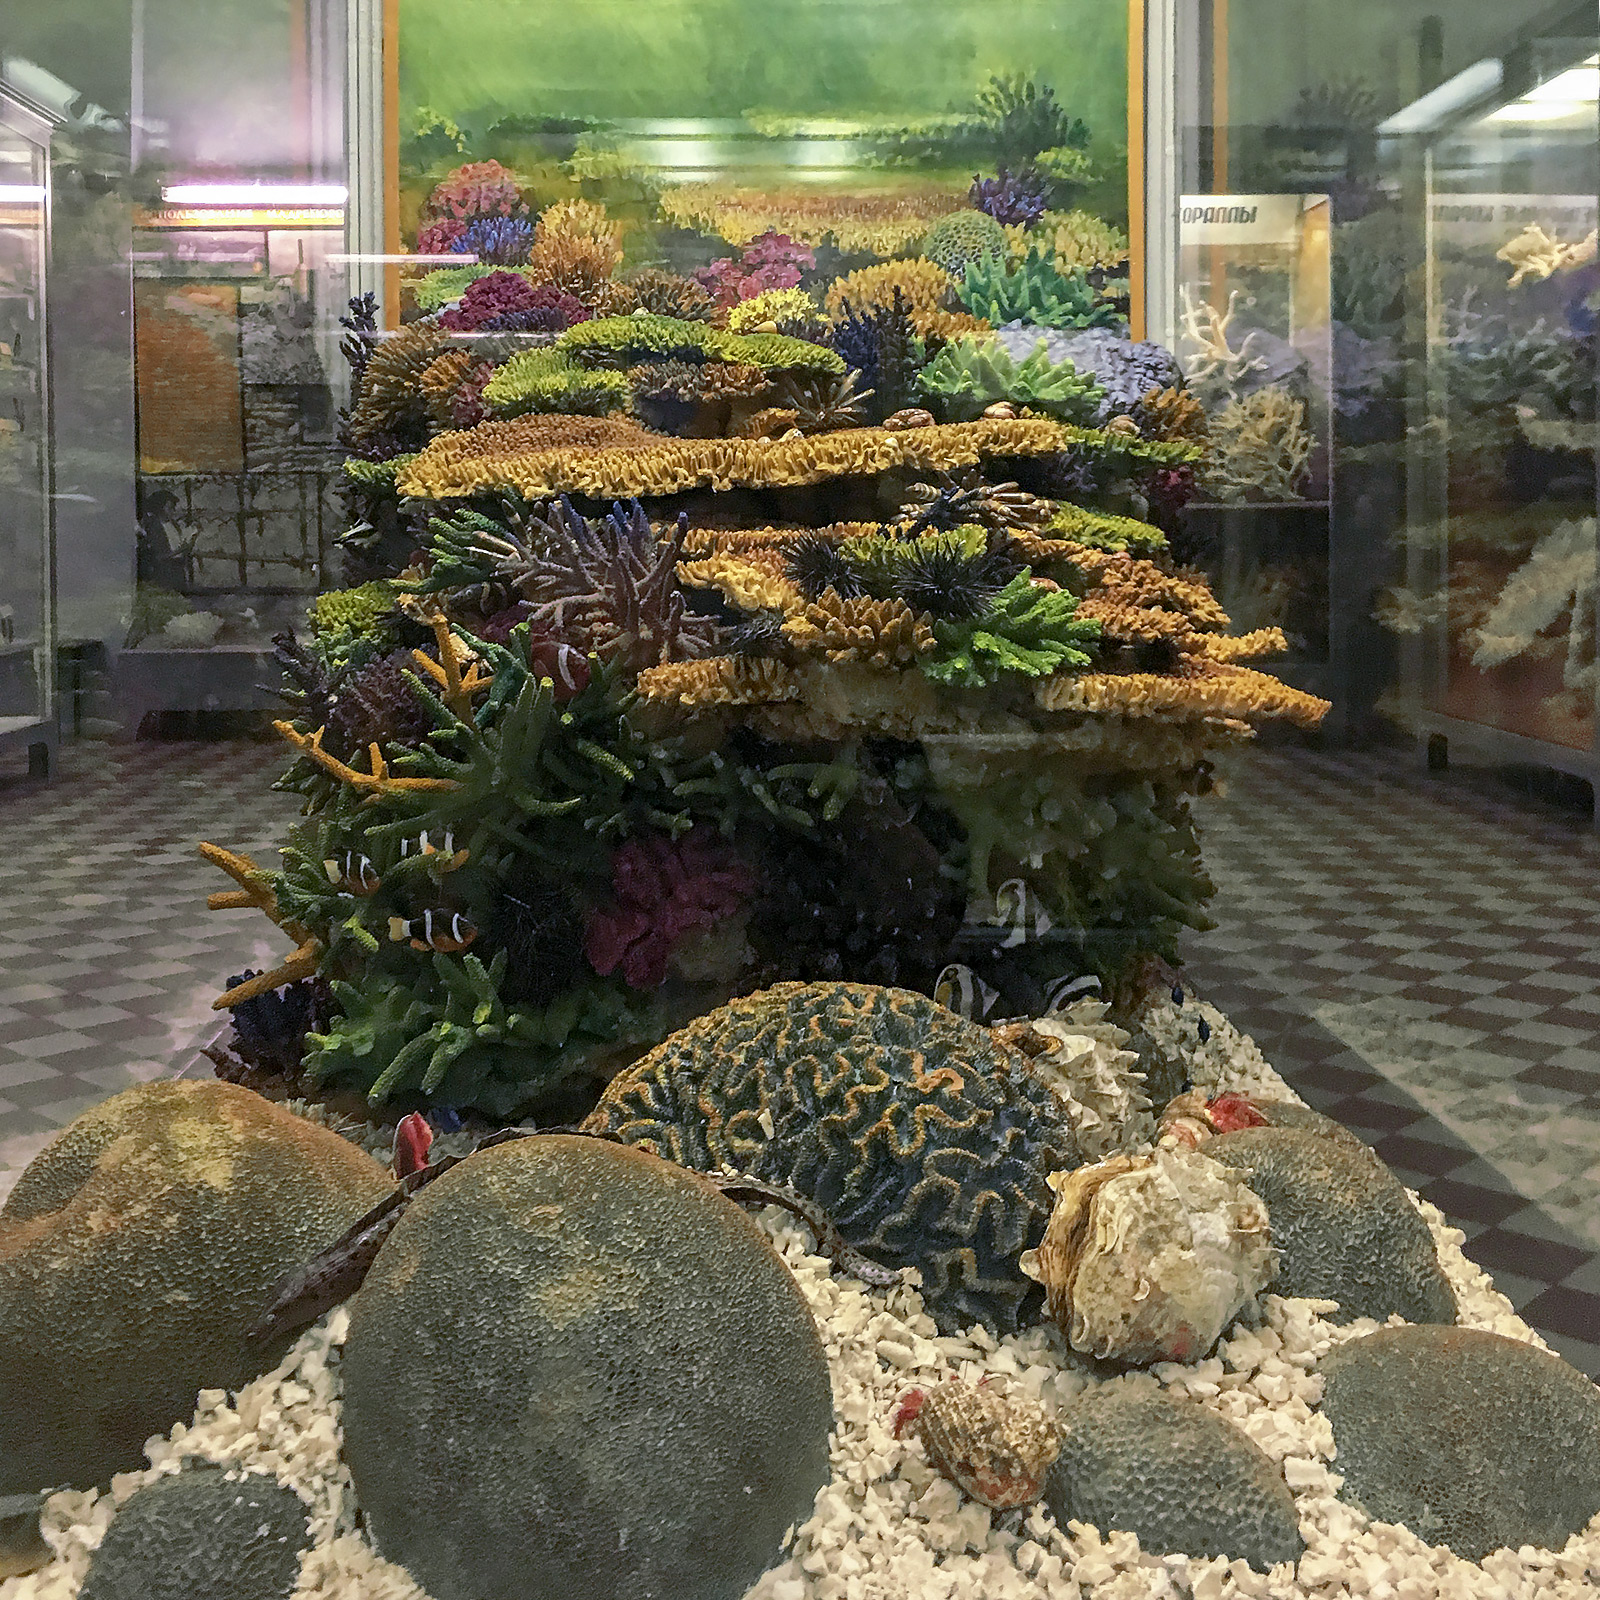 Specimens – Zoological Museum St Petersburg